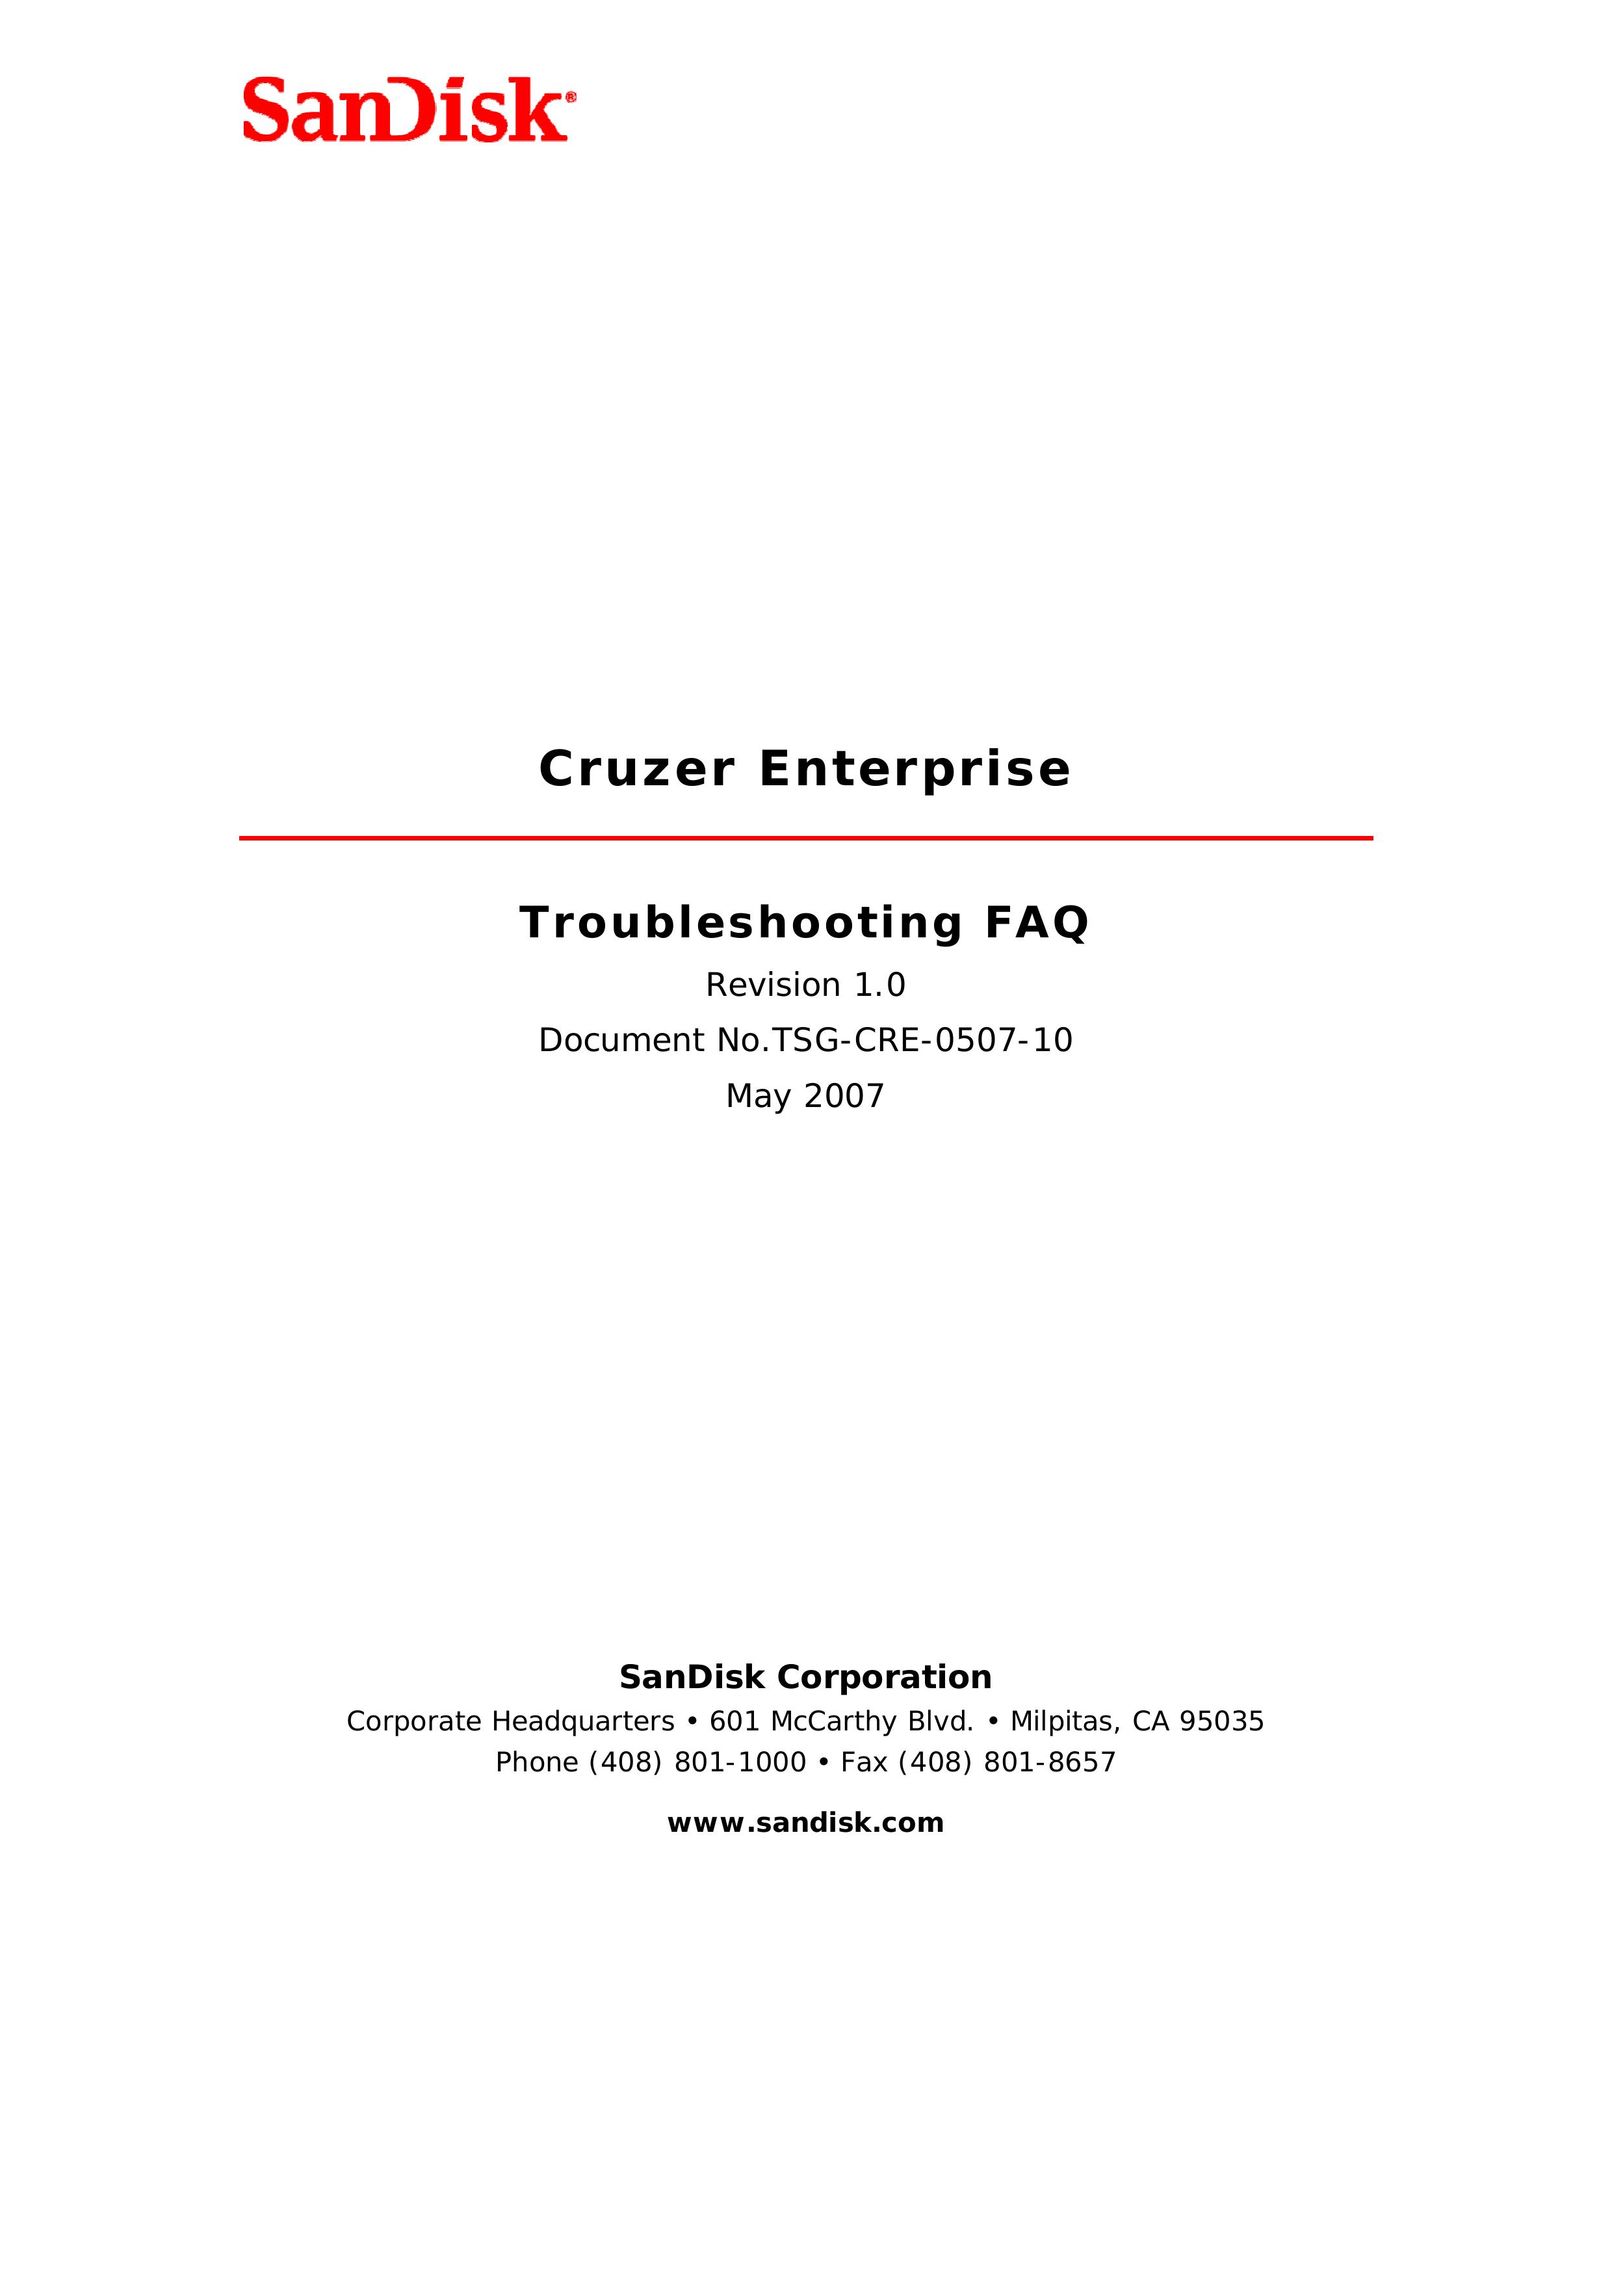 SanDisk Cruzer Enterprise Computer Drive User Manual